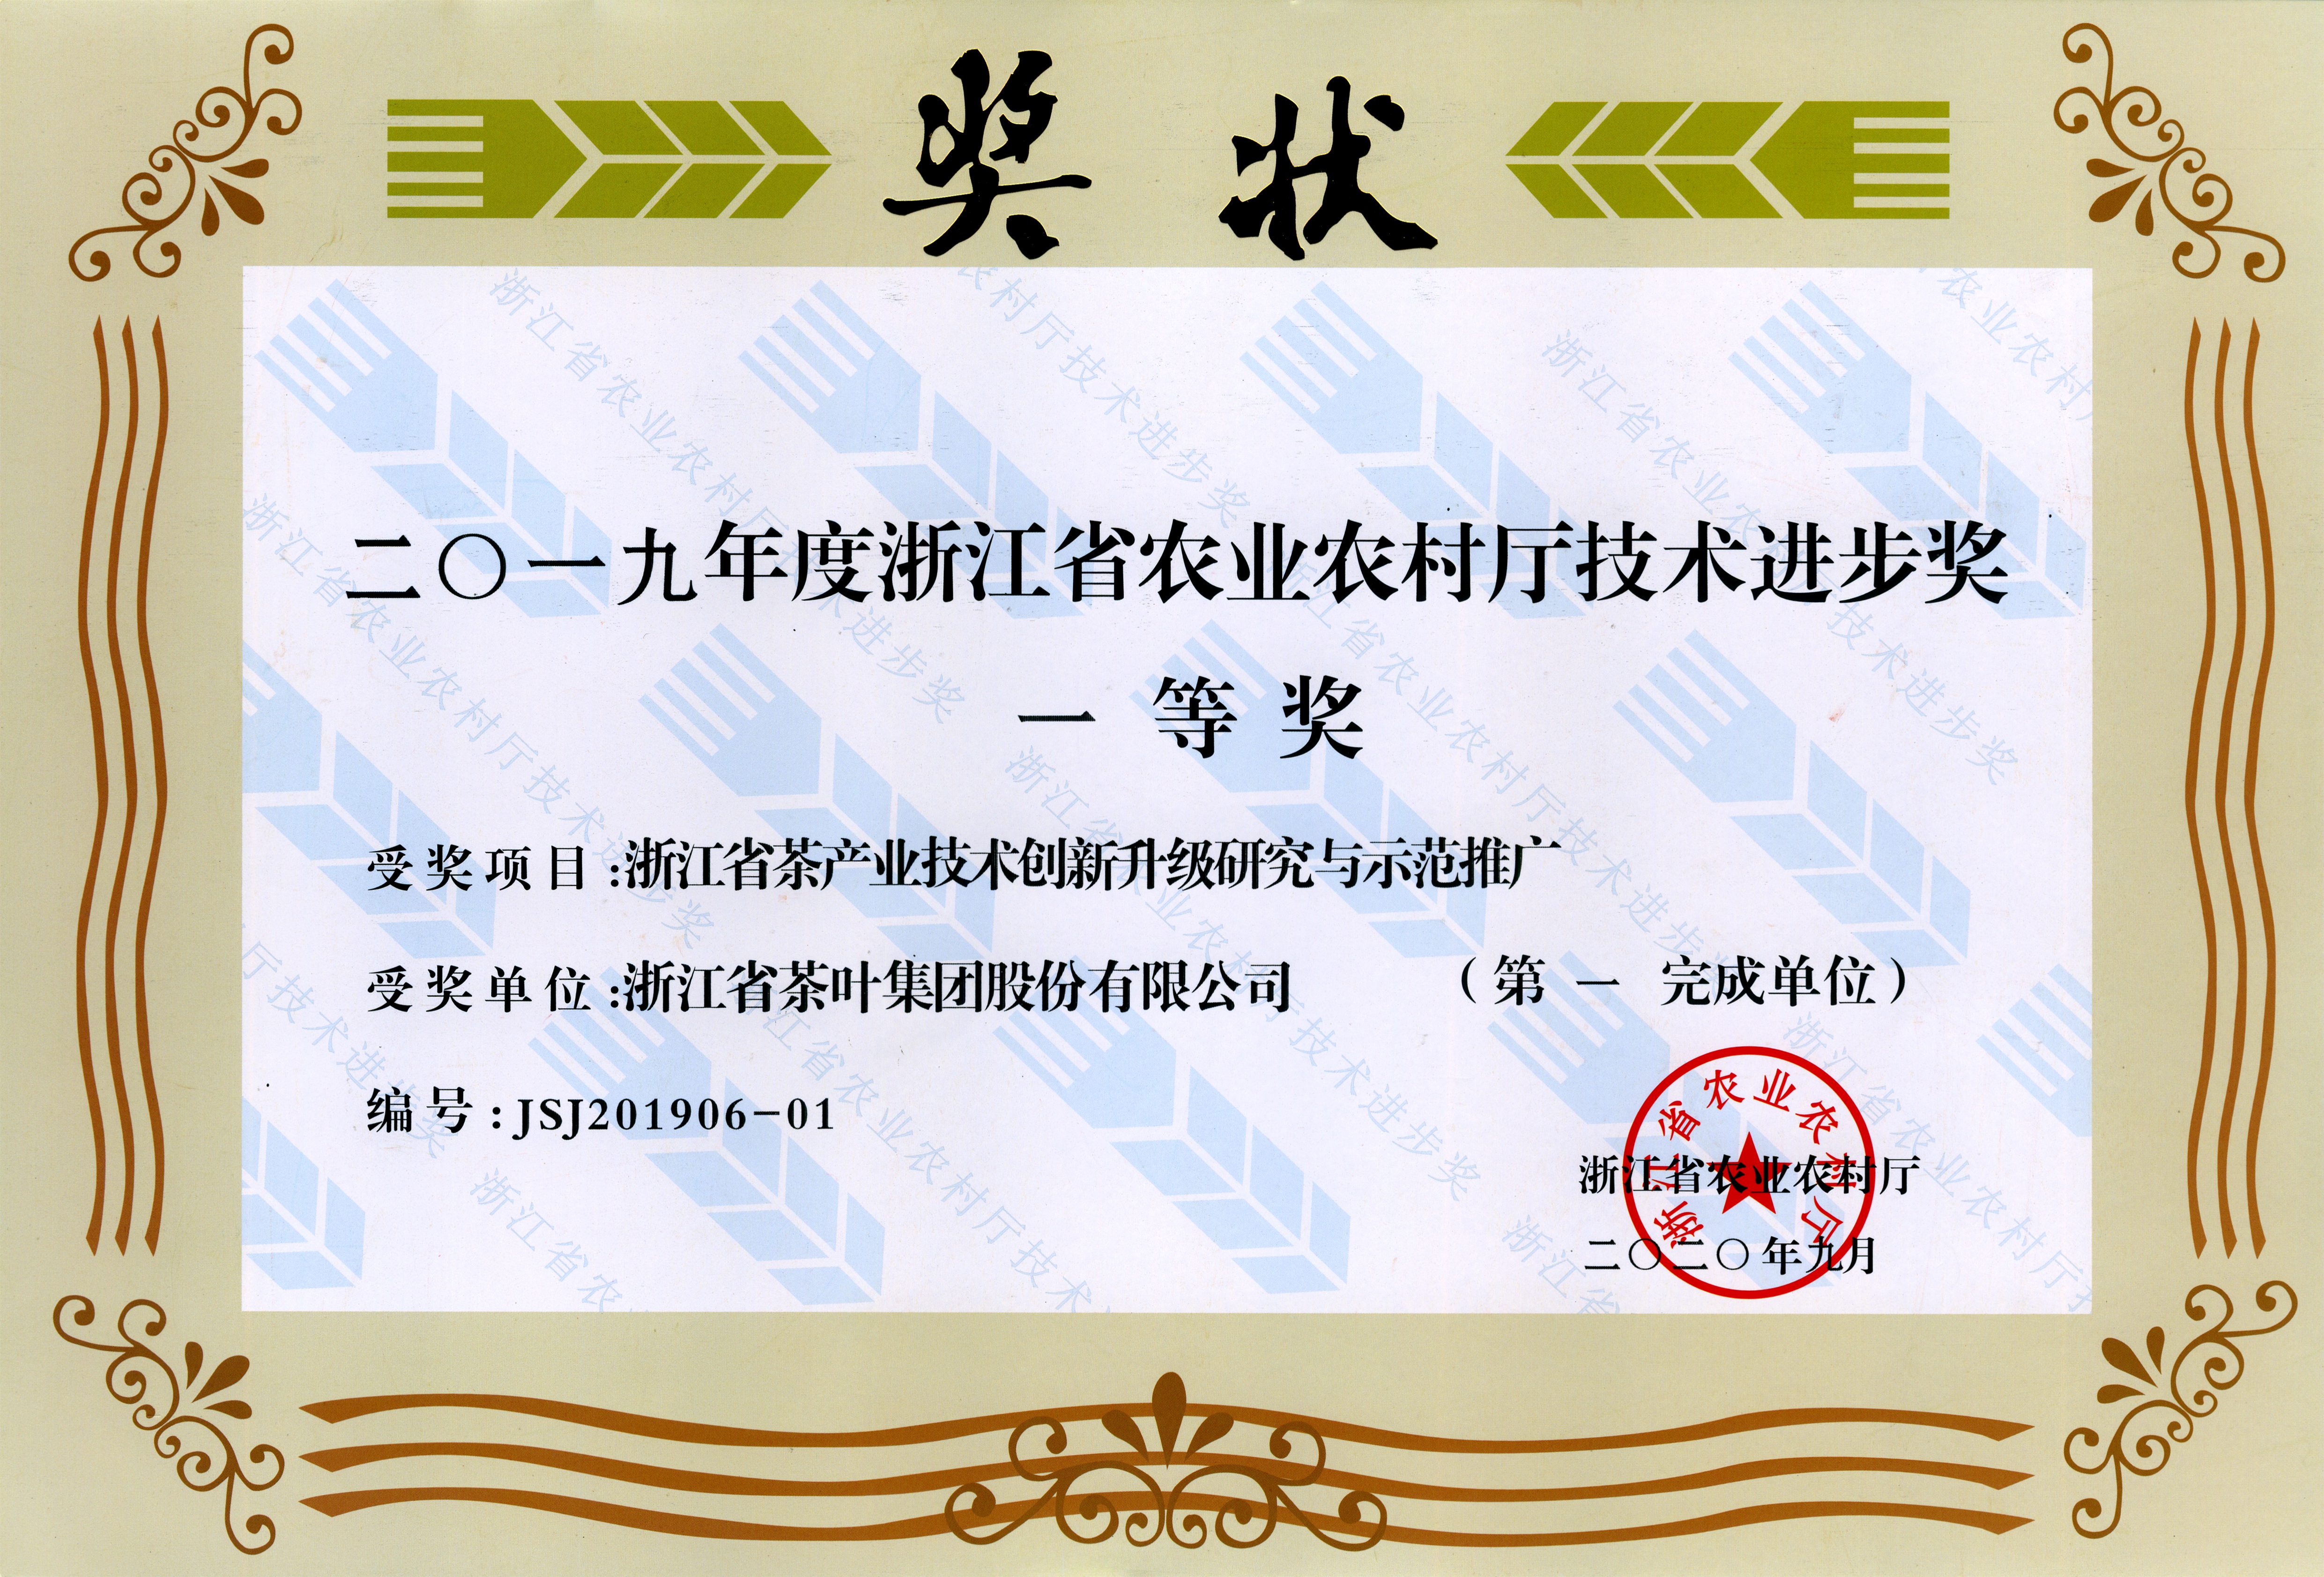 leyu体育平台（中国）股份有限公司牵头完成项目荣获省农业农村厅 技术进步一等奖